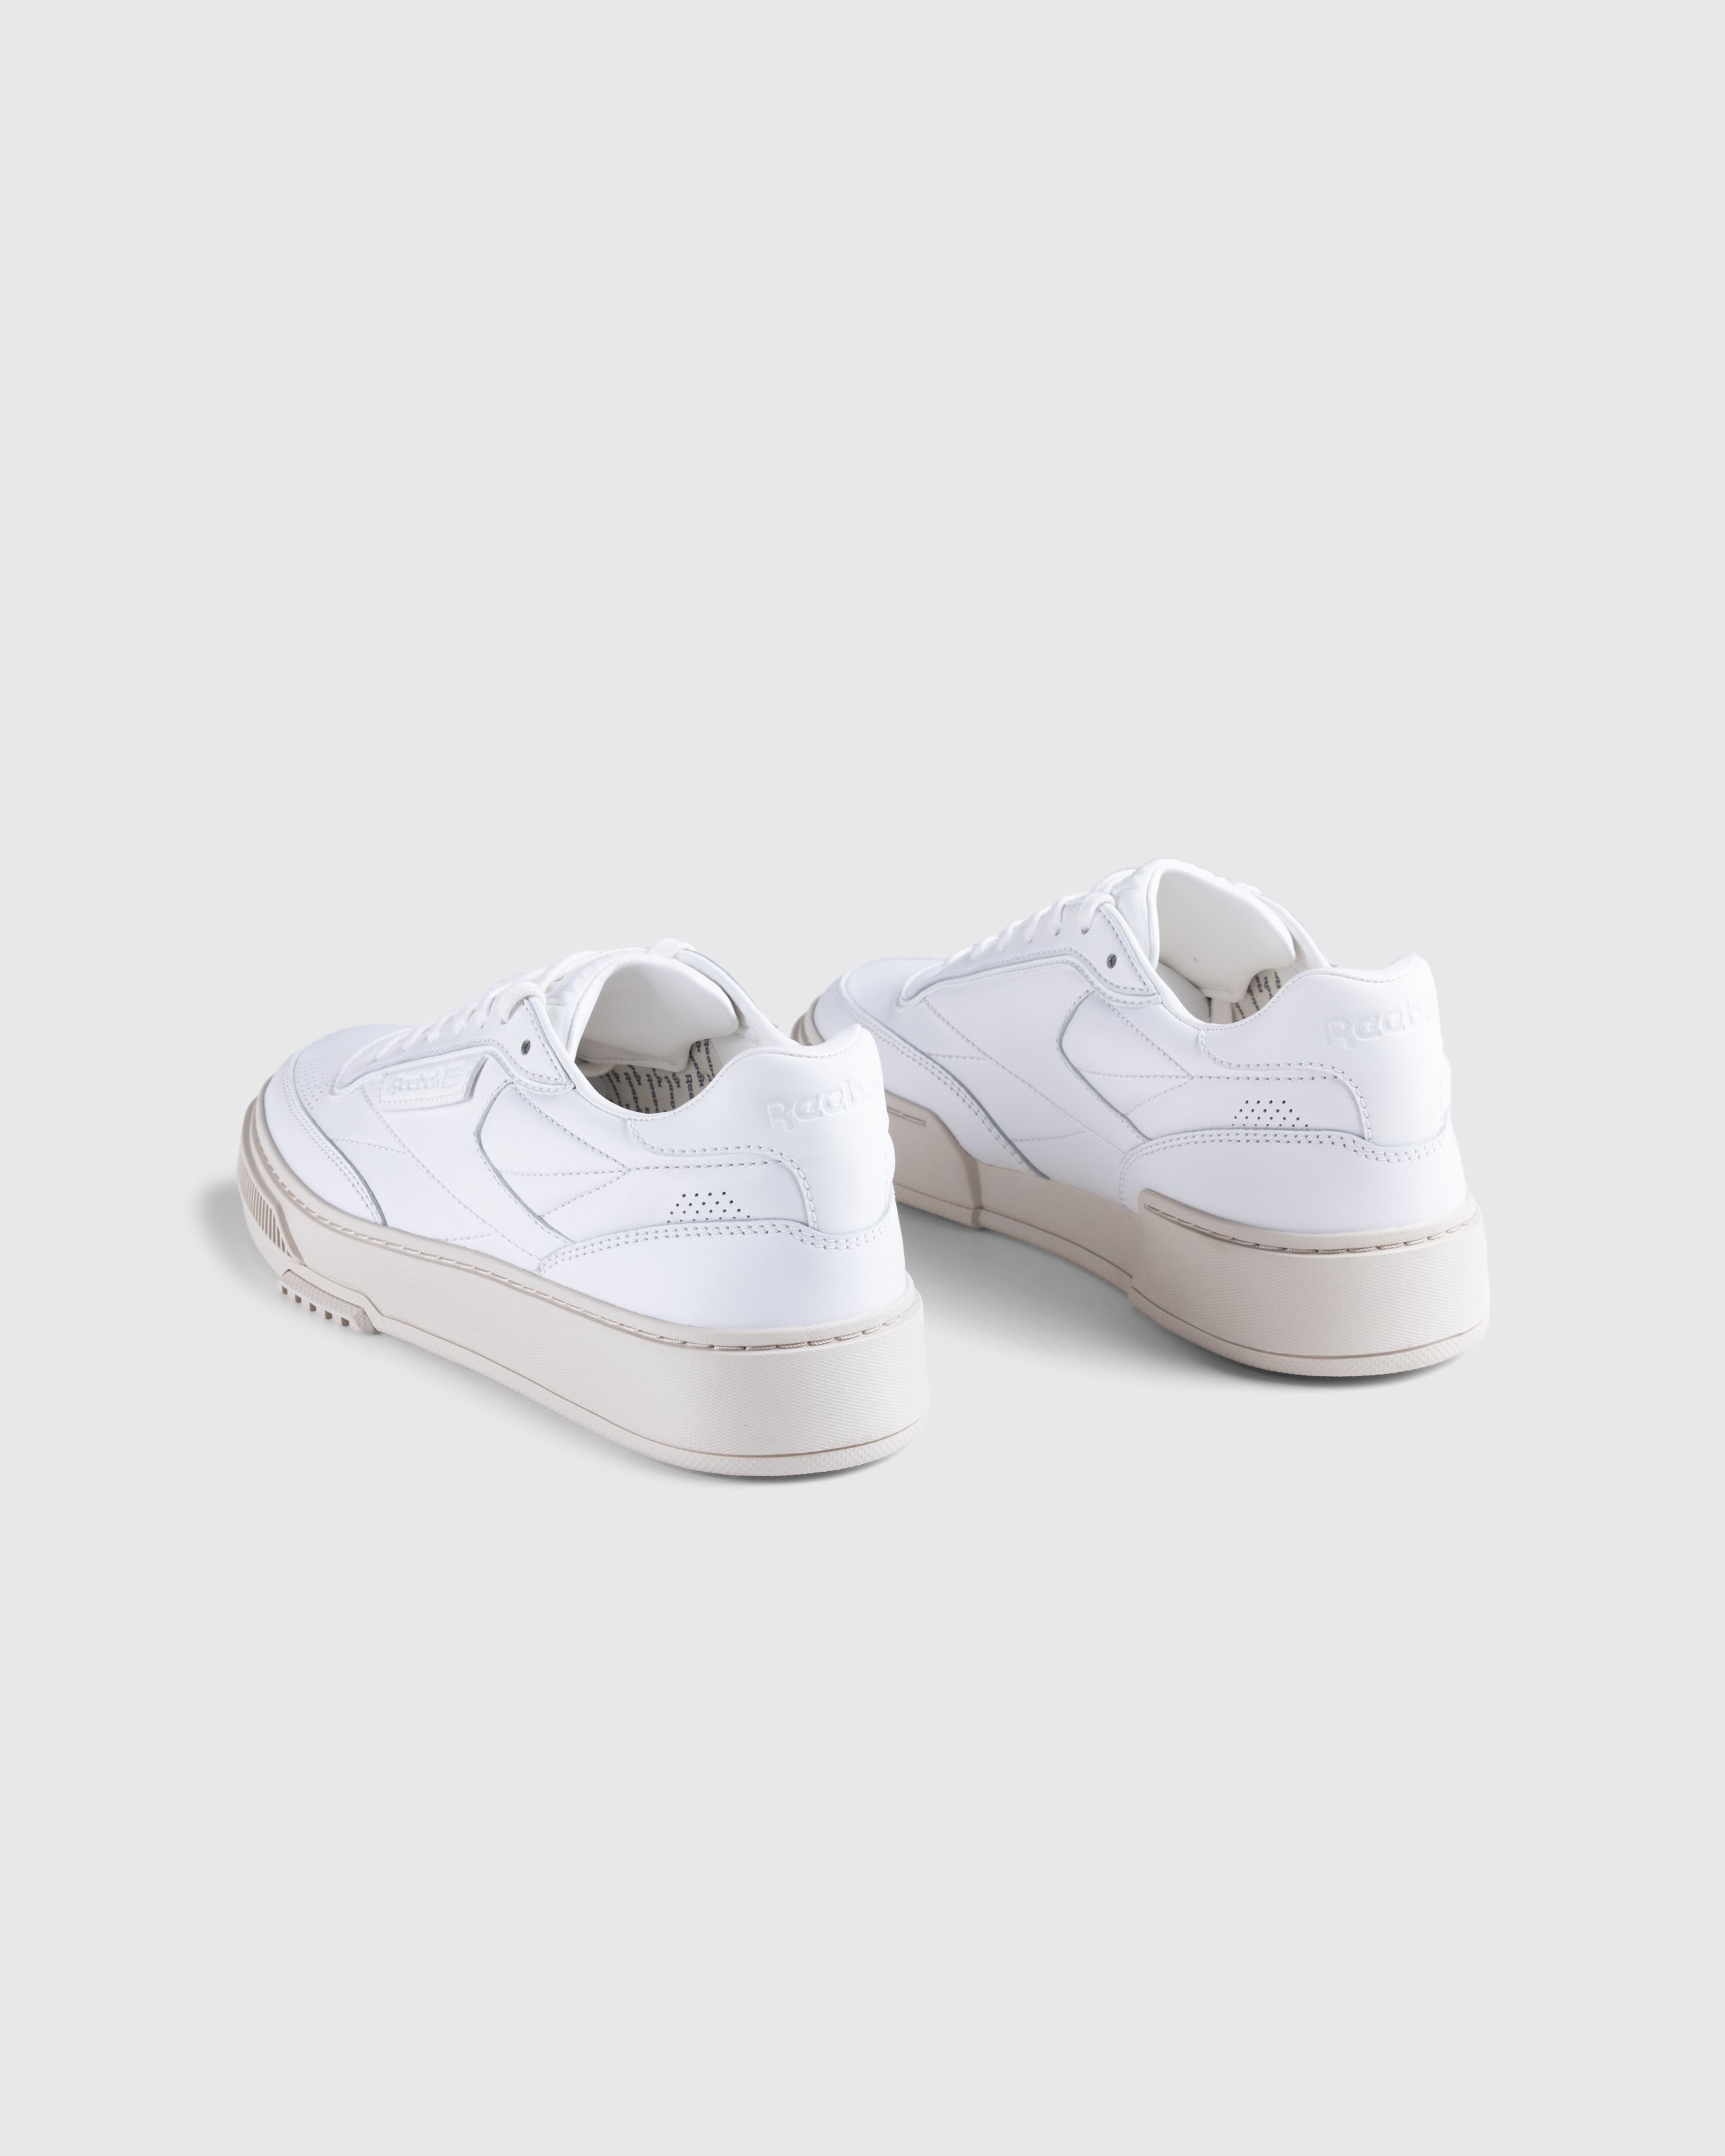 Reebok LTD - CLUB C LTD White (Luxe Leather) - Footwear - White - Image 4